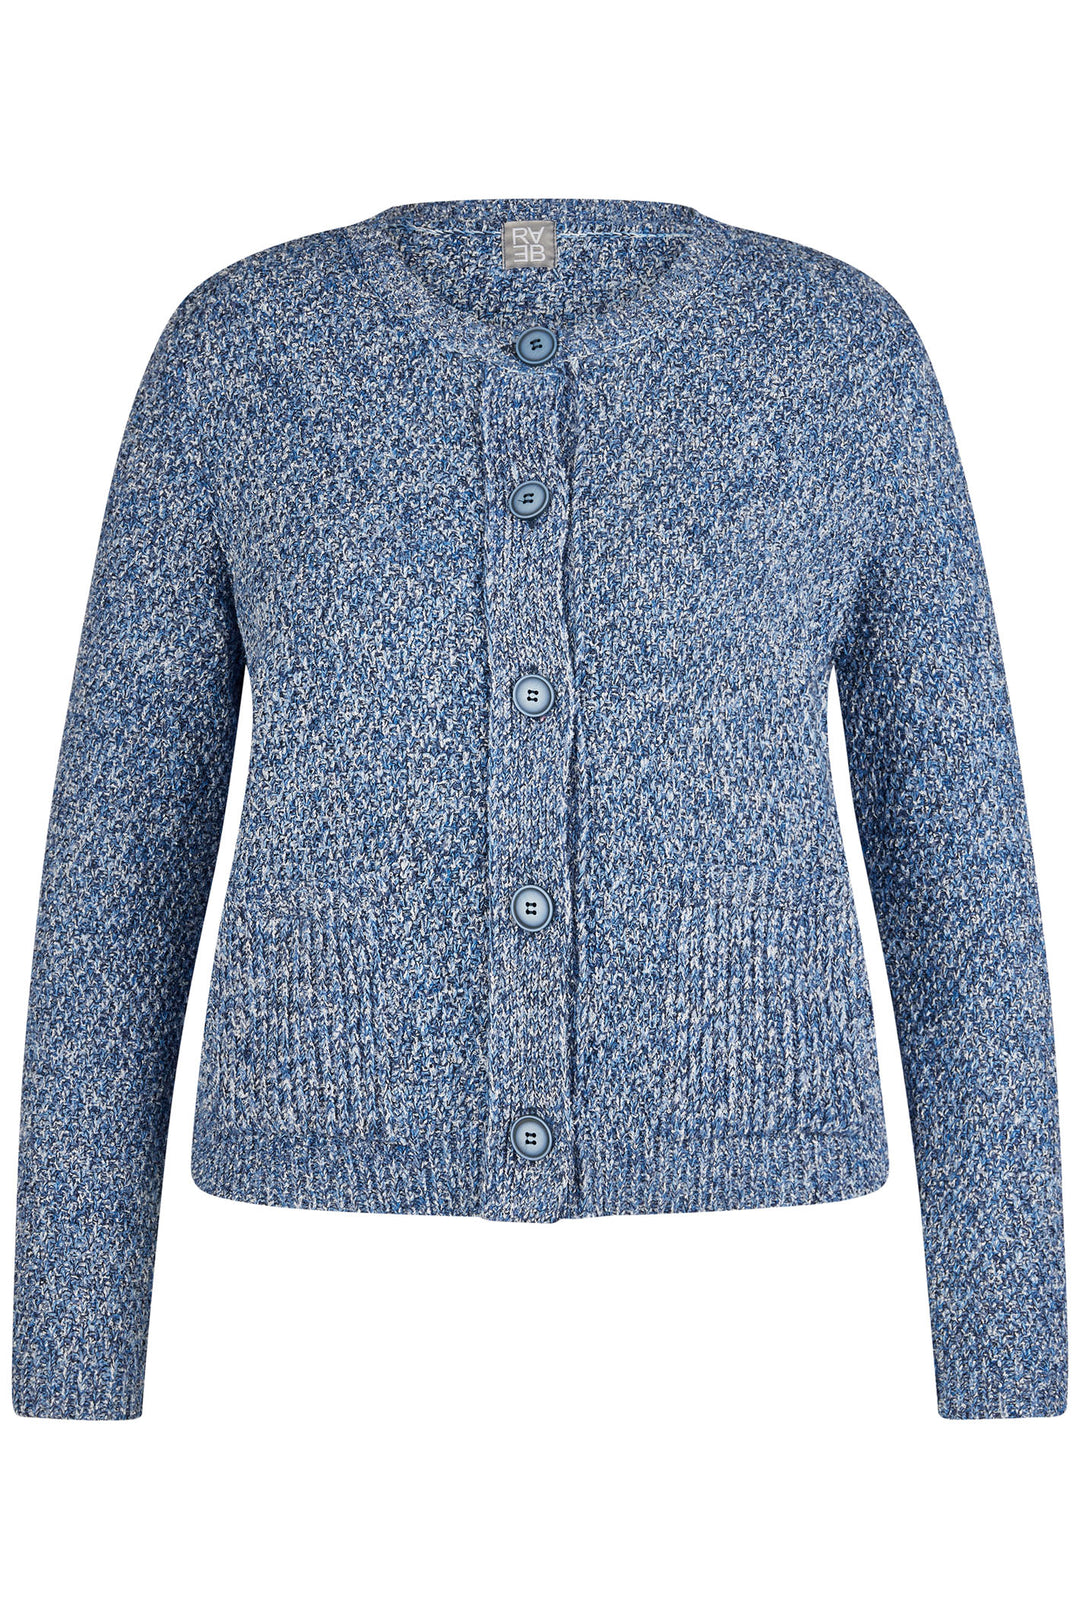 Hatley Pink Knit Cardigan – Beginning Boutique NZ